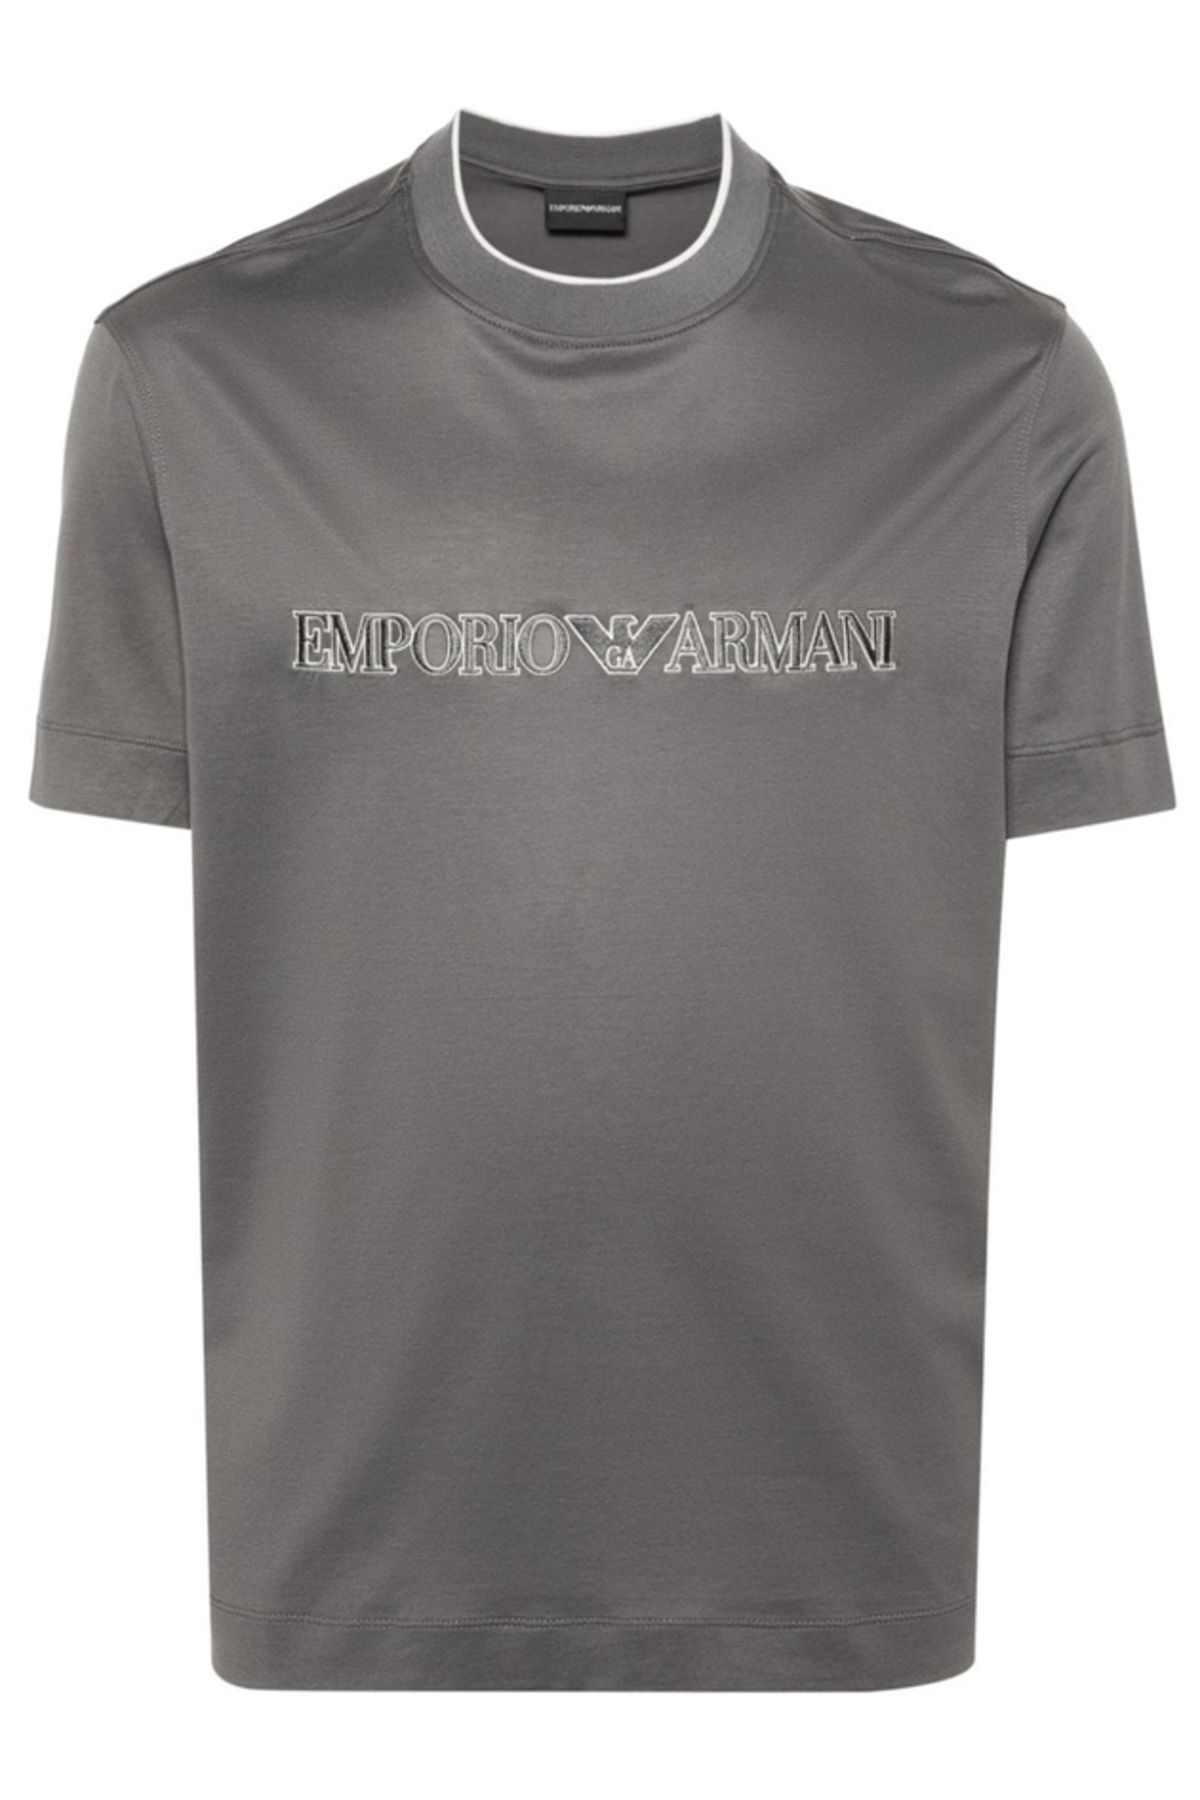 Emporio Armani Erkek Logolu Kısa Kollu Pamuklu Gri T-Shirt 3D1TD4 1JUVZ-06I2